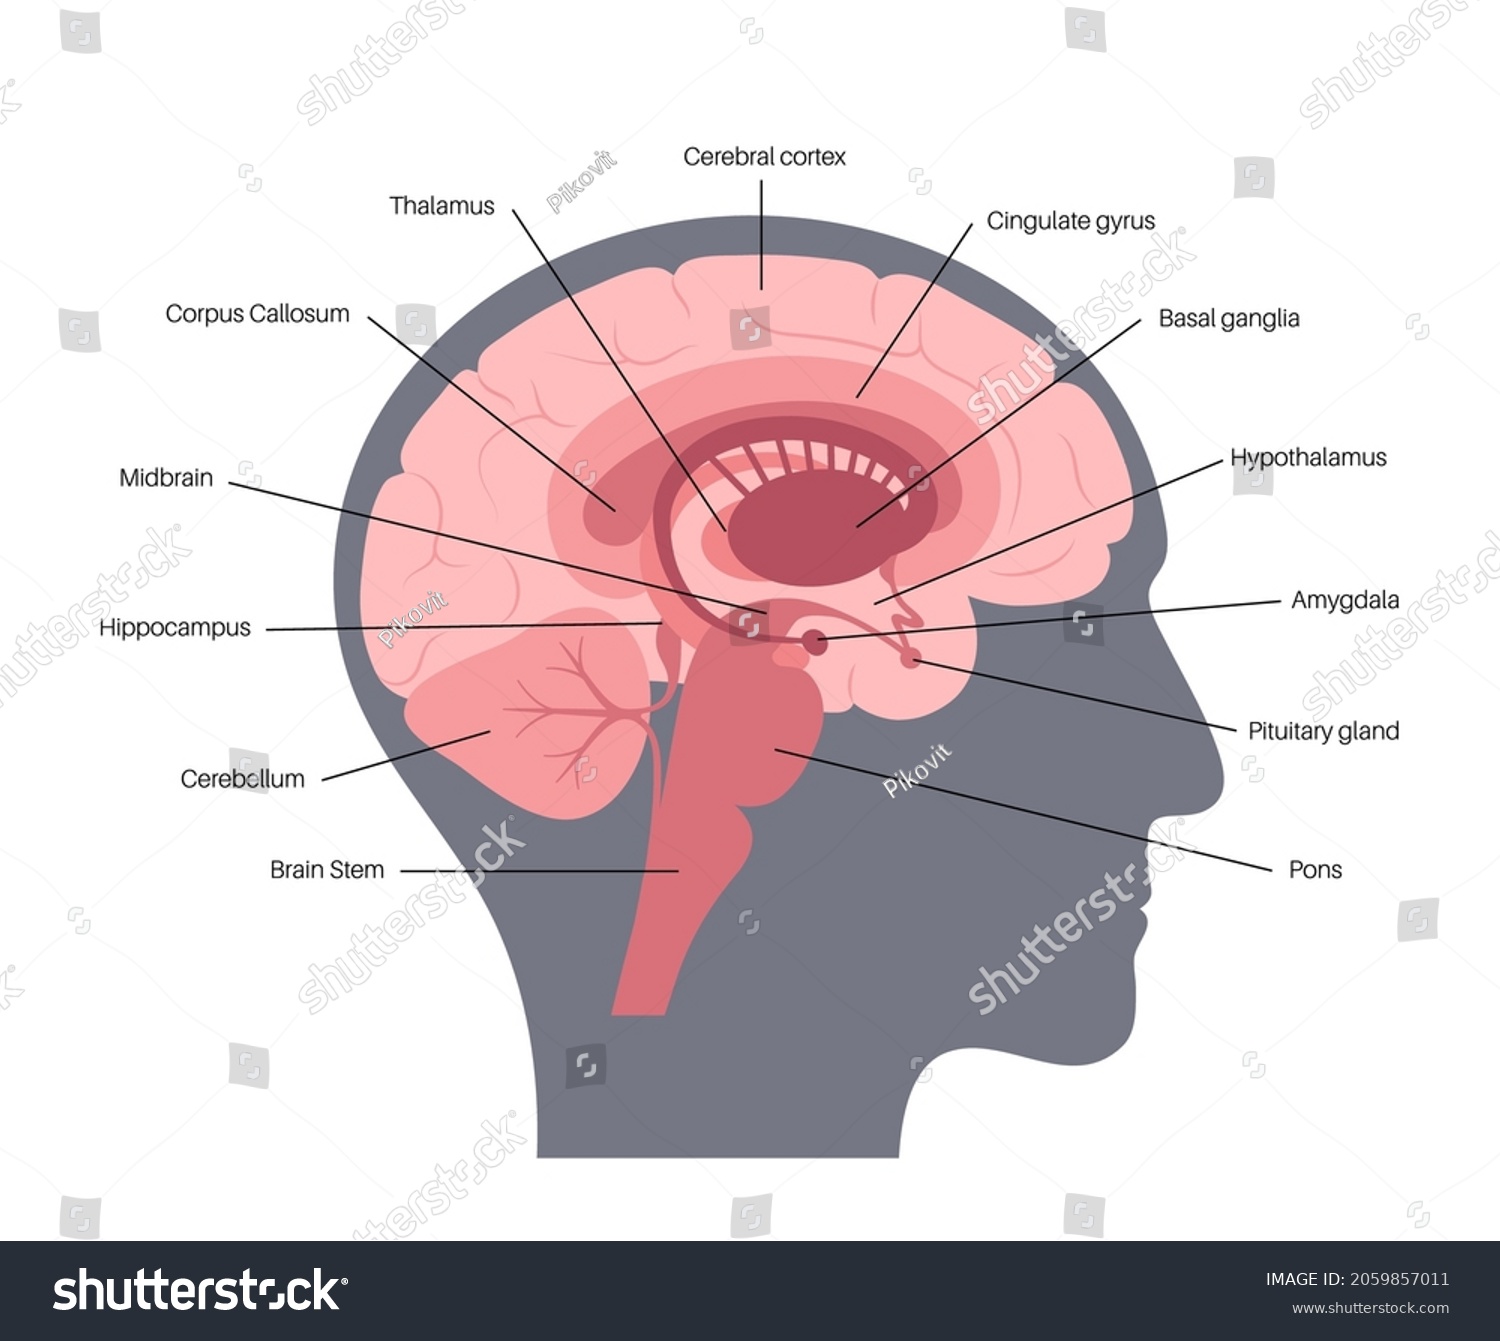 SVG of Human brain anatomy on a white background. Limbic system and neural network. Basal ganglia, amygdala, thalamus, cingulate gyrus and hypothalamus. Cerebral cortex and cerebrum flat vector illustration. svg